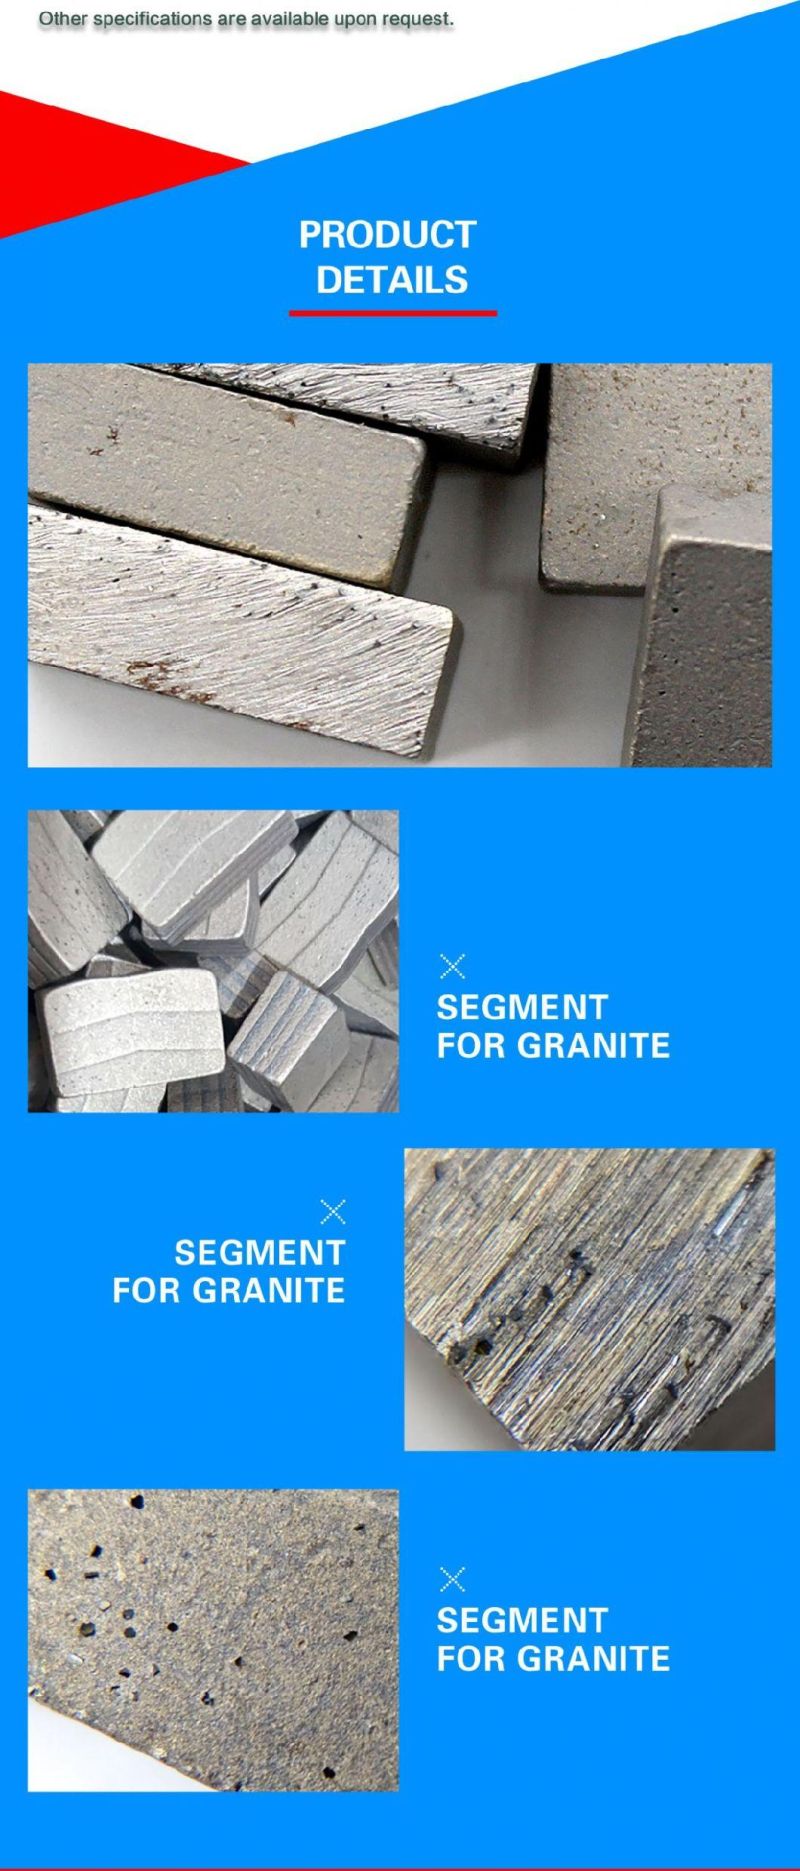 Granite Segment for 6.5mm Multi Blade 24X7.6/8.4X15mm Diamond Segment